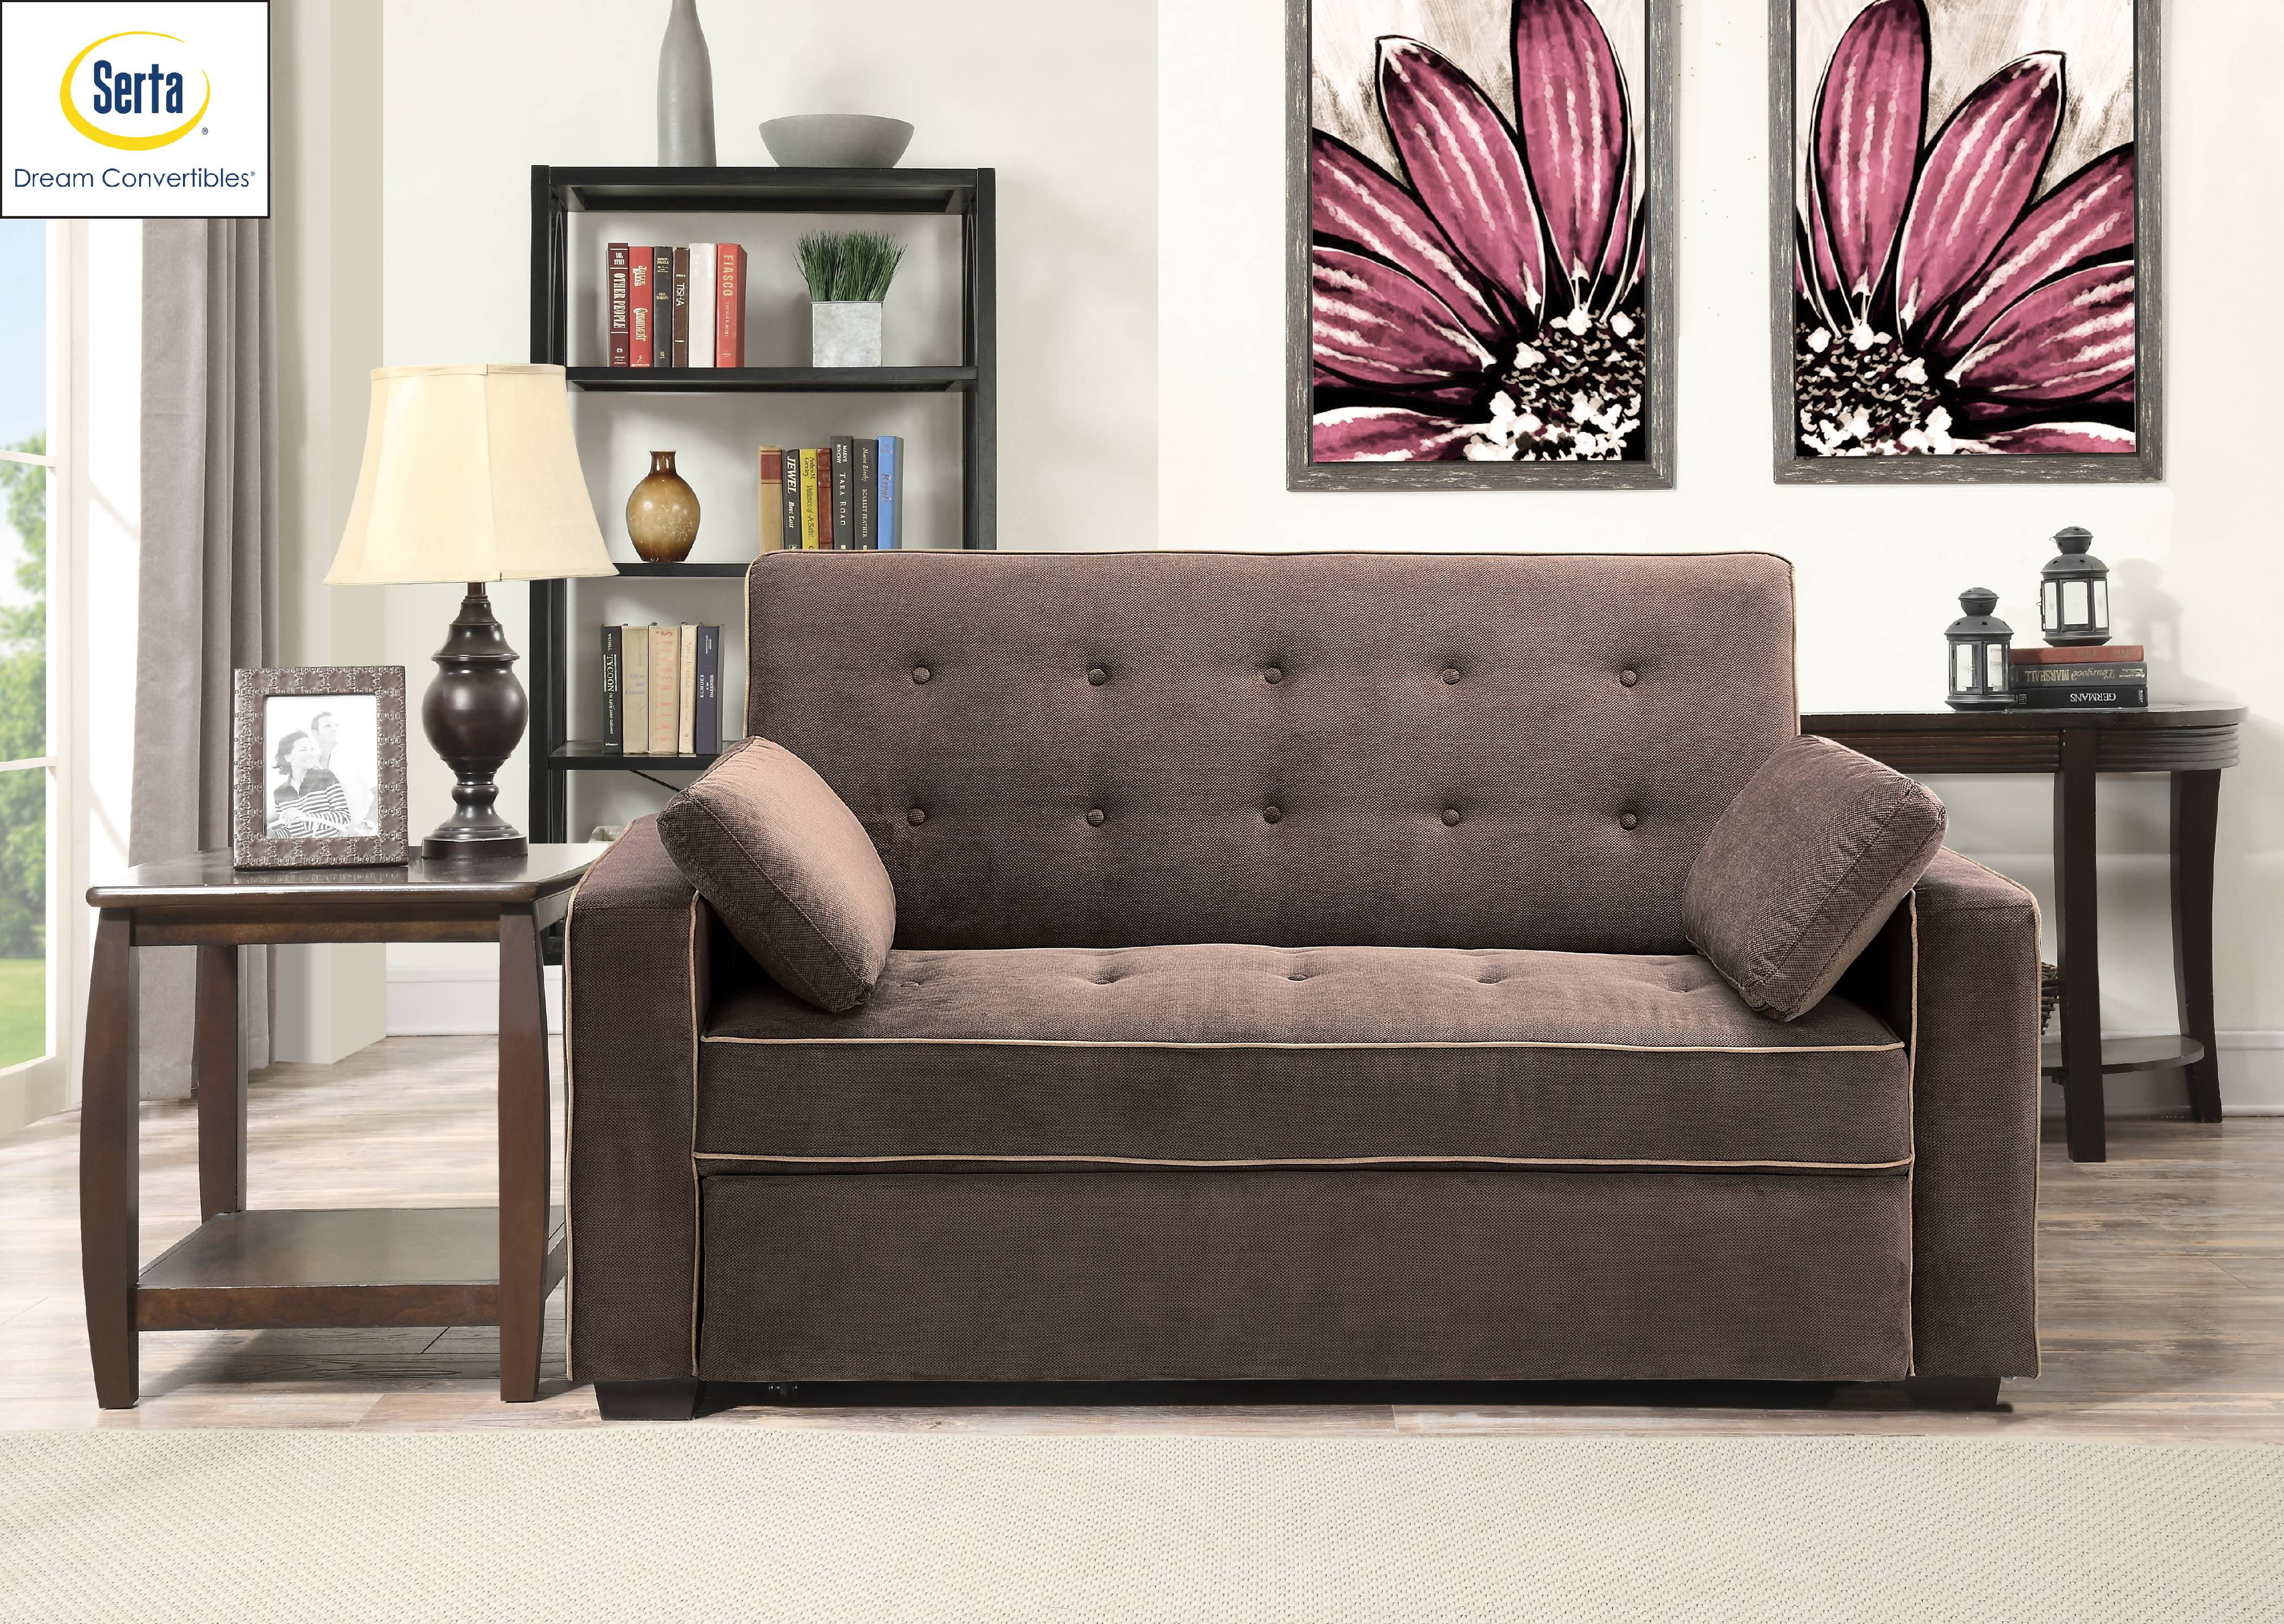 Serta Monroe Full Sofa Bed Java  Walmart com  Walmart com